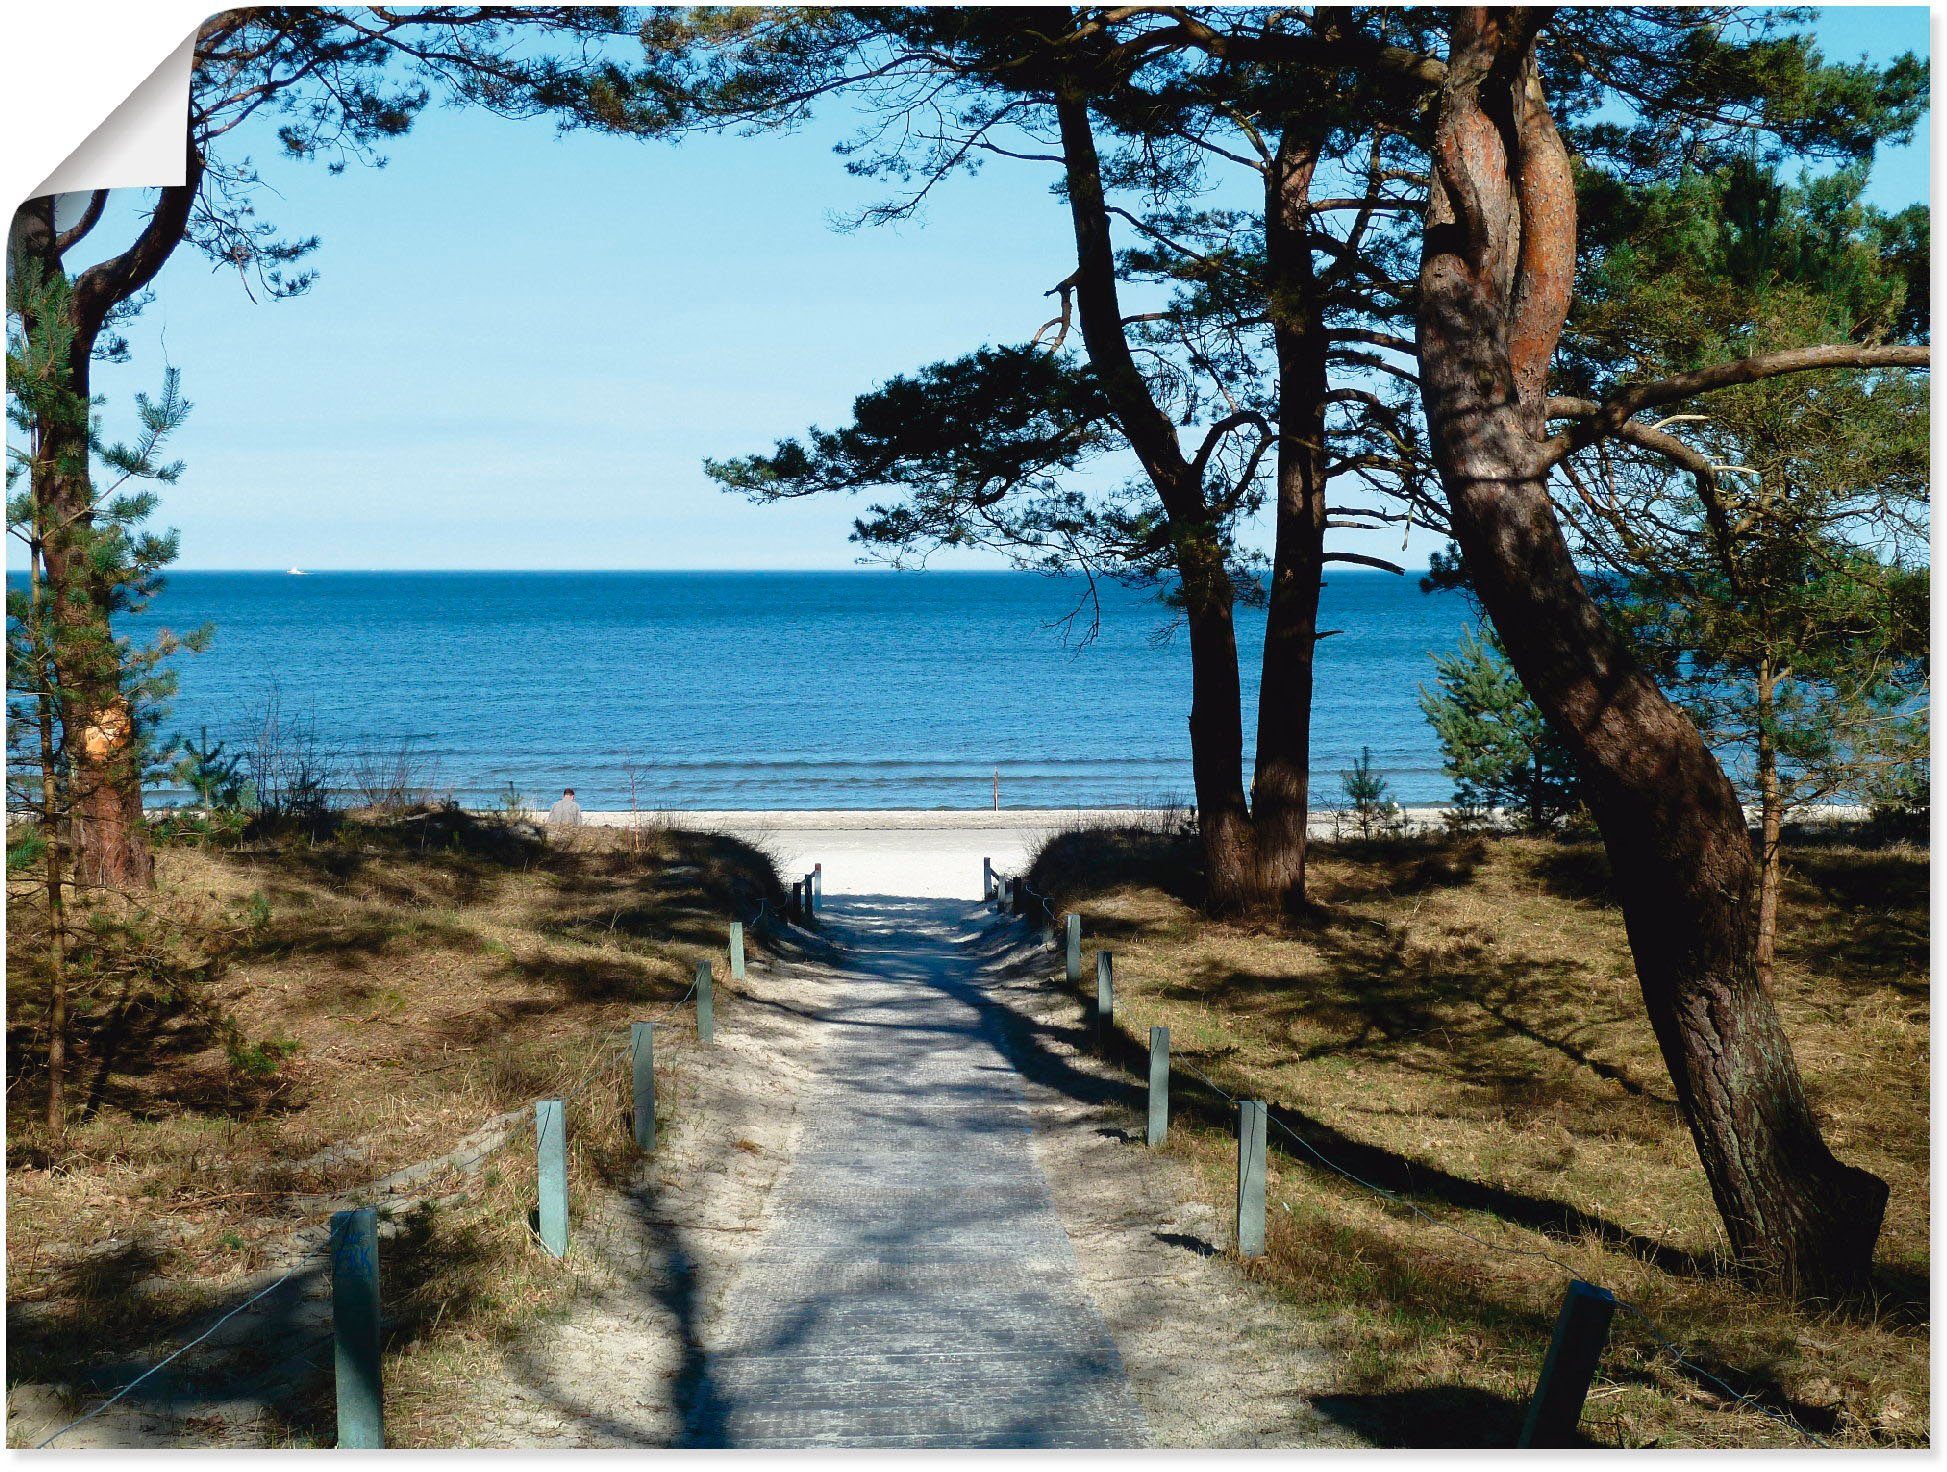 Wandaufkleber Ostseeküste, in als (1 Artland versch. St), Größen schöne Poster Wandbild Leinwandbild, oder Gewässer